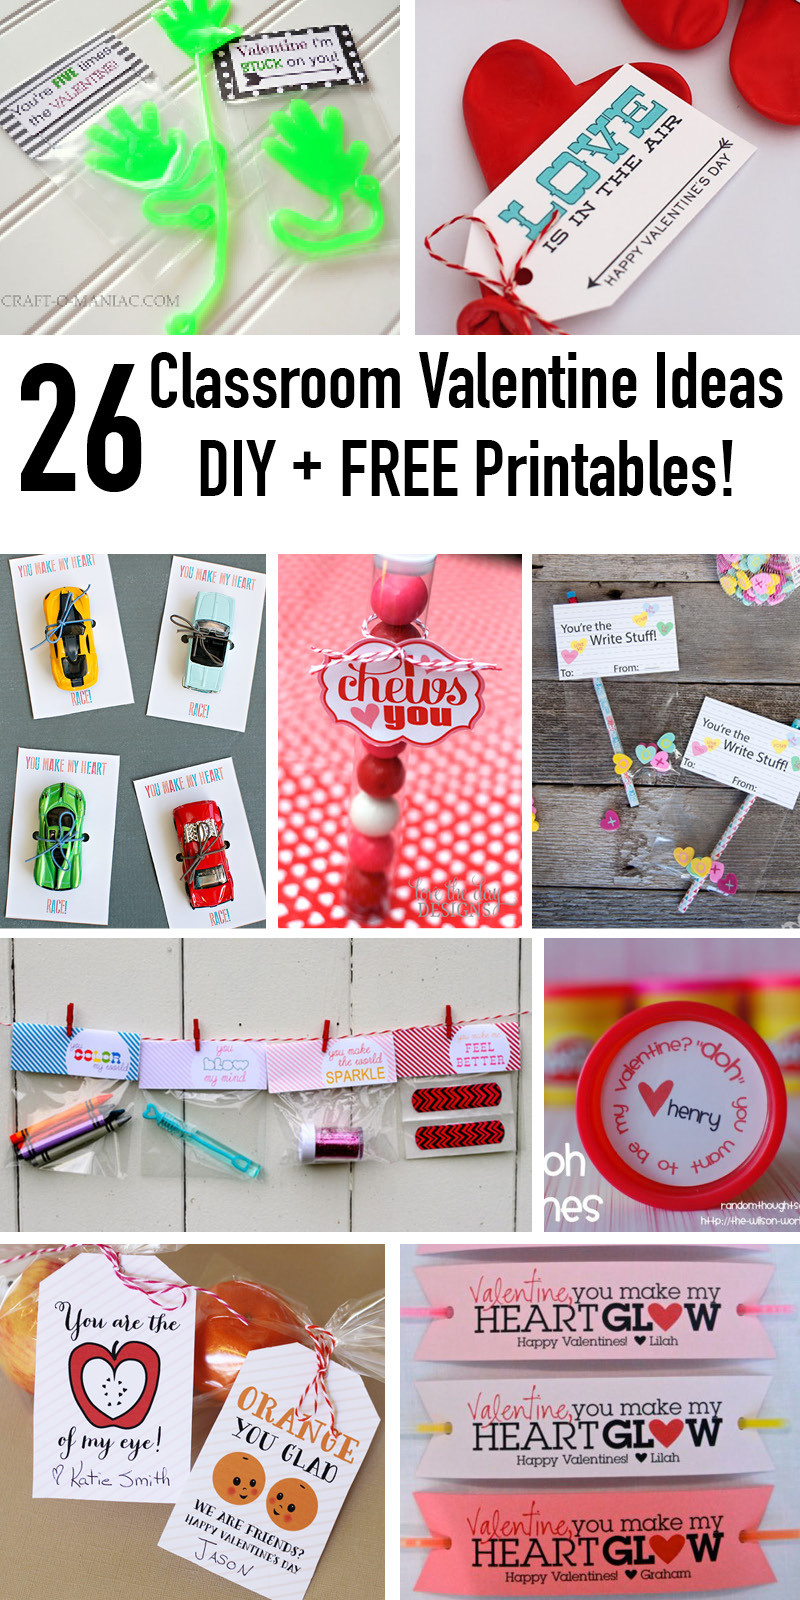 Classroom Valentine Gift Ideas
 Classroom Valentines Ideas Top 26 DIY FREE Printables